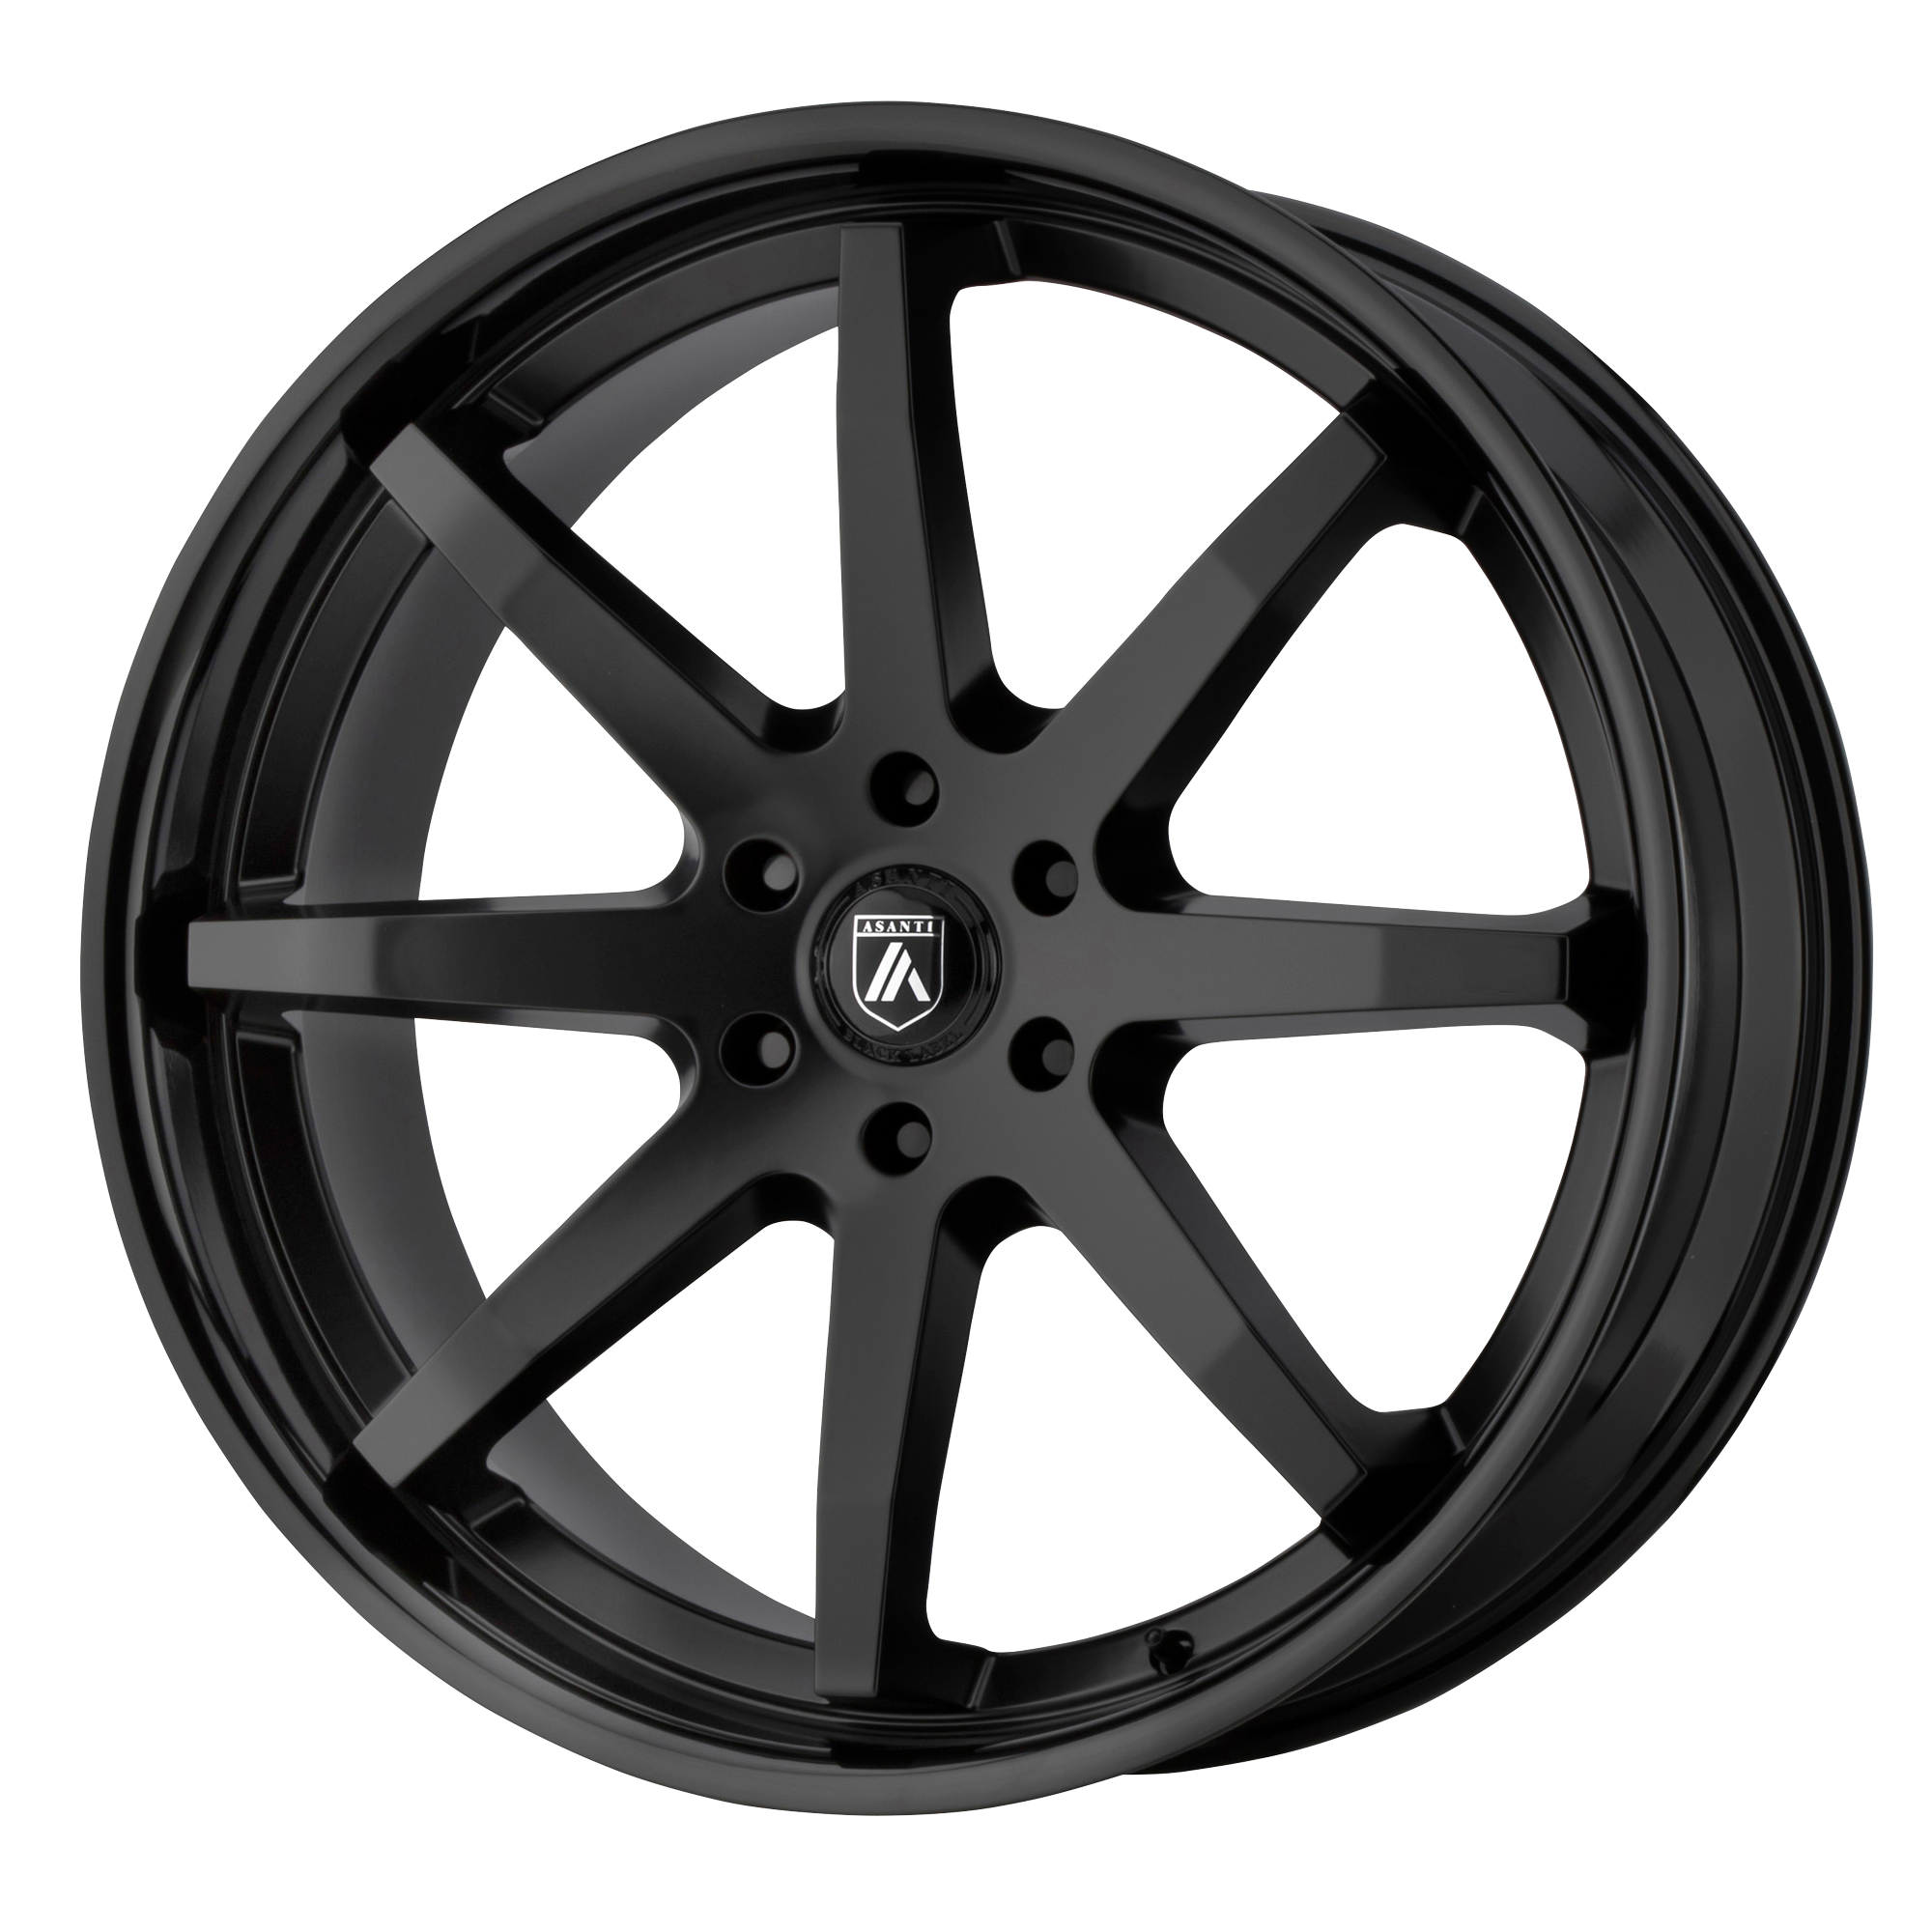 KAISER 22x9.5 5x120.00 SATIN BLACK W/ GLOSS BLACK LIP (30 mm) - Tires and Engine Performance